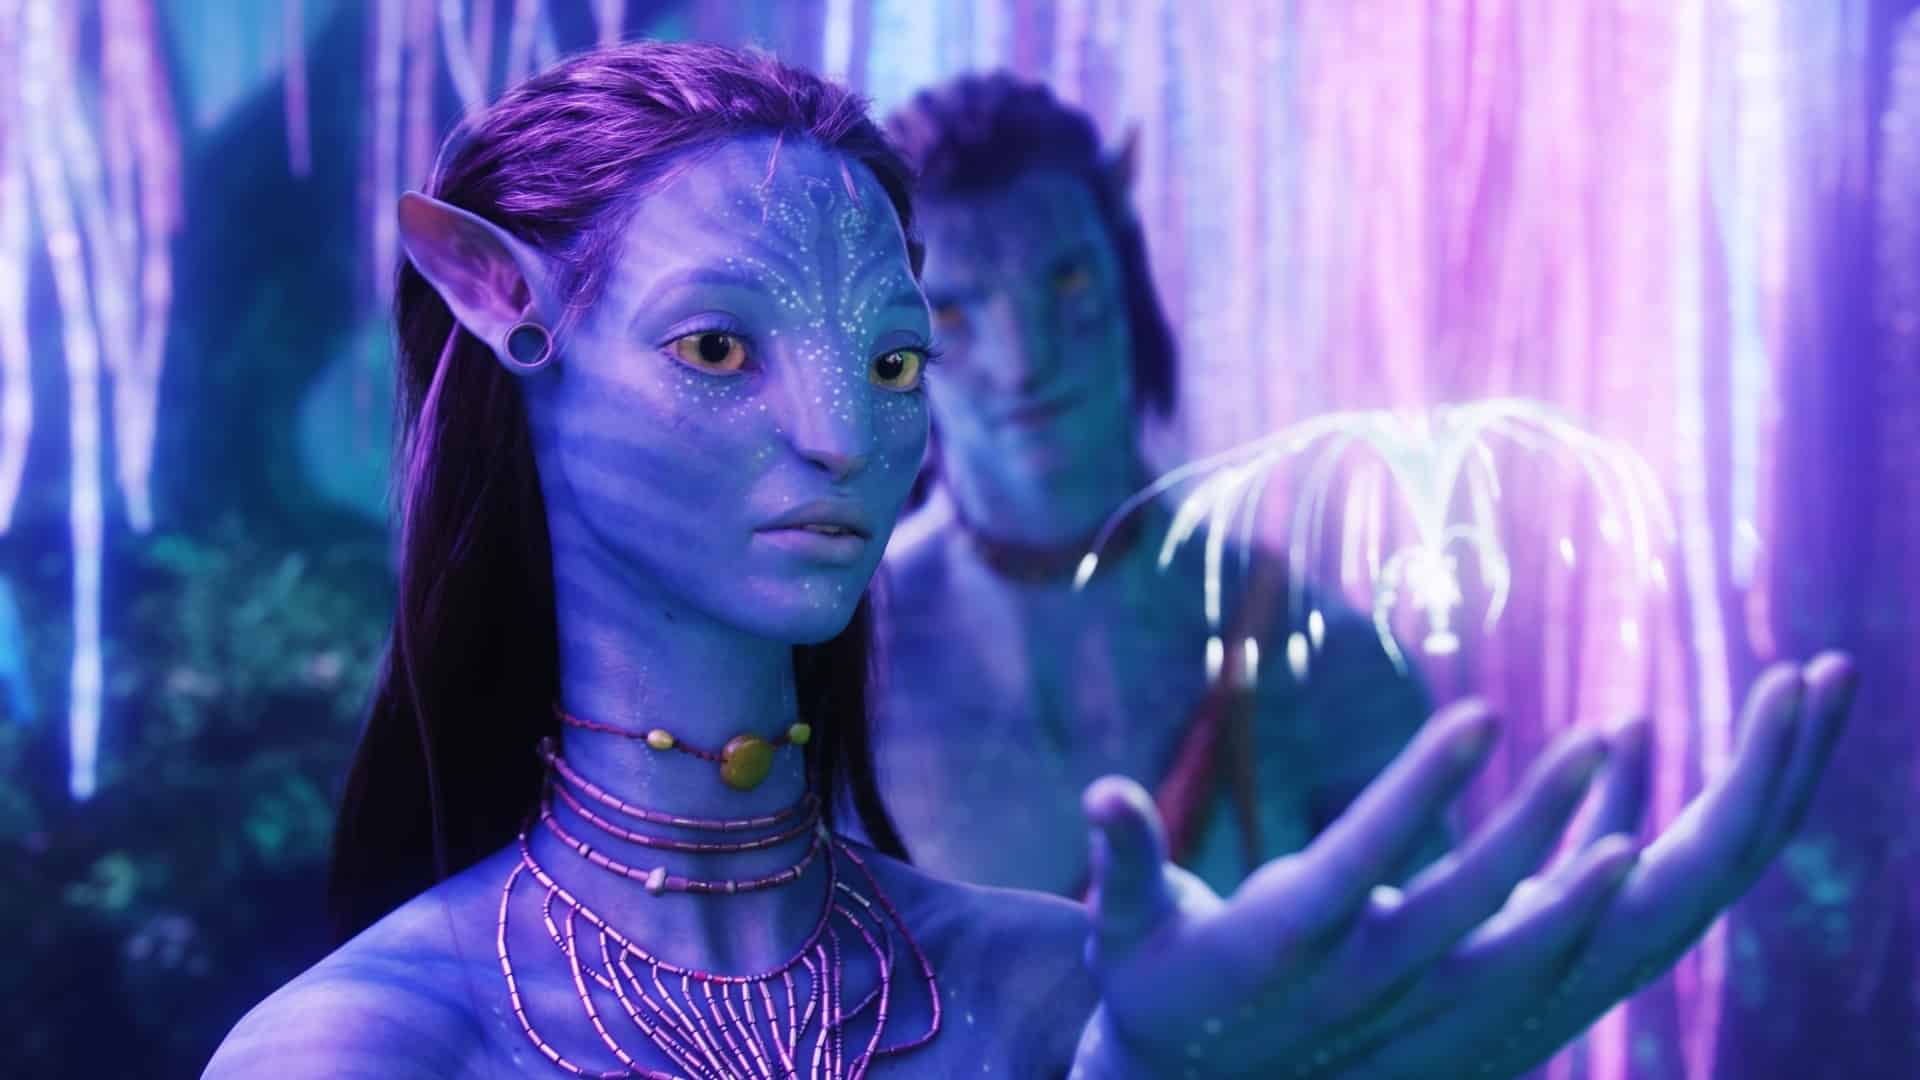 Zoe Saldana and Sam Worthington in the original Avatar.